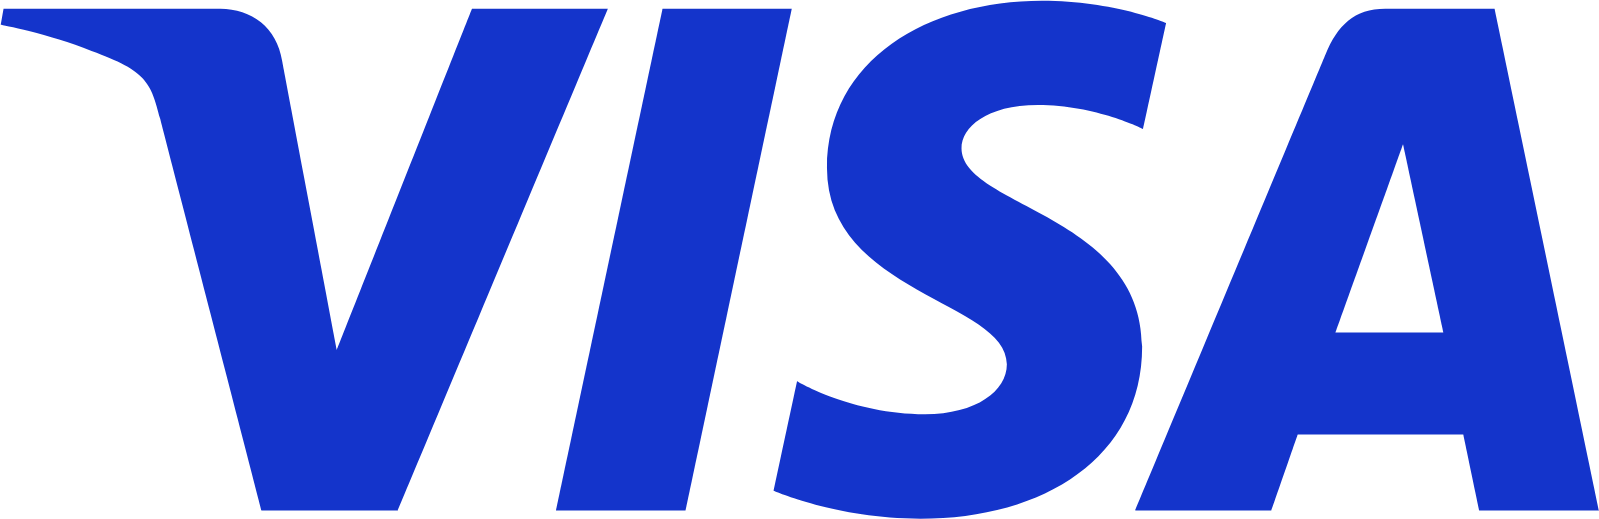 Visa logo (PNG transparent)